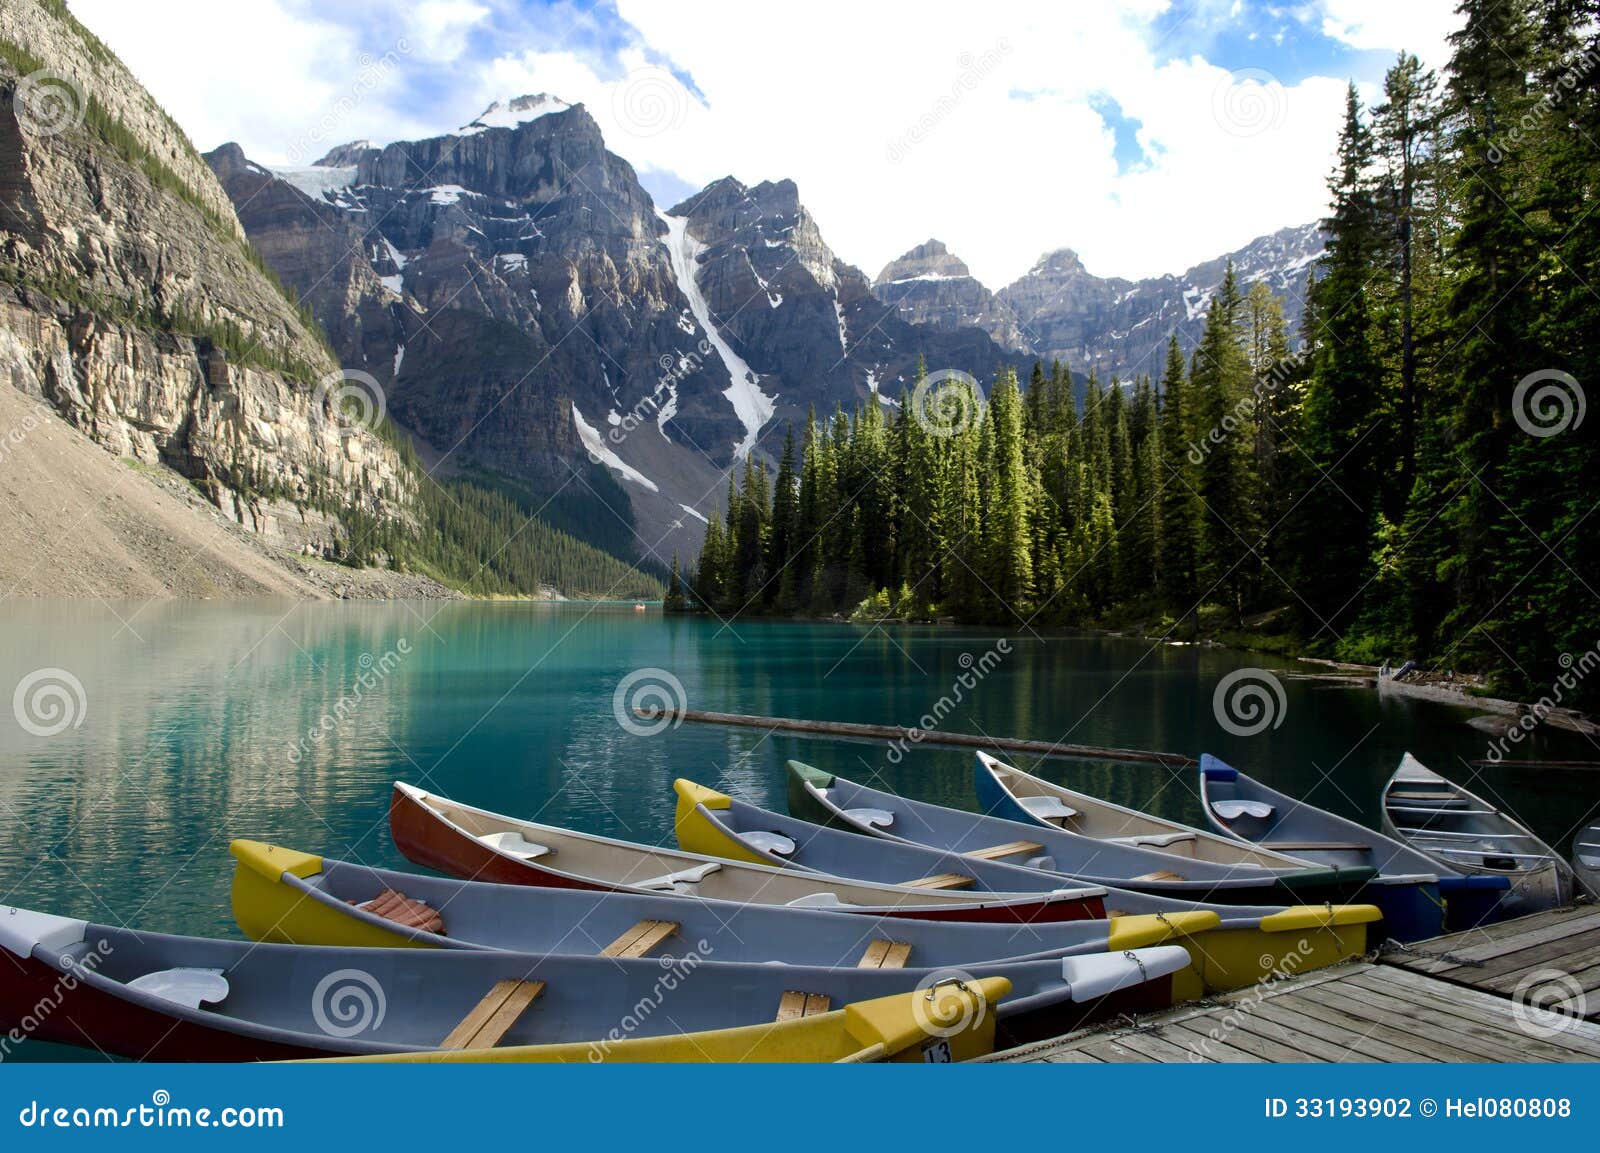 boats on moraine lake, canada